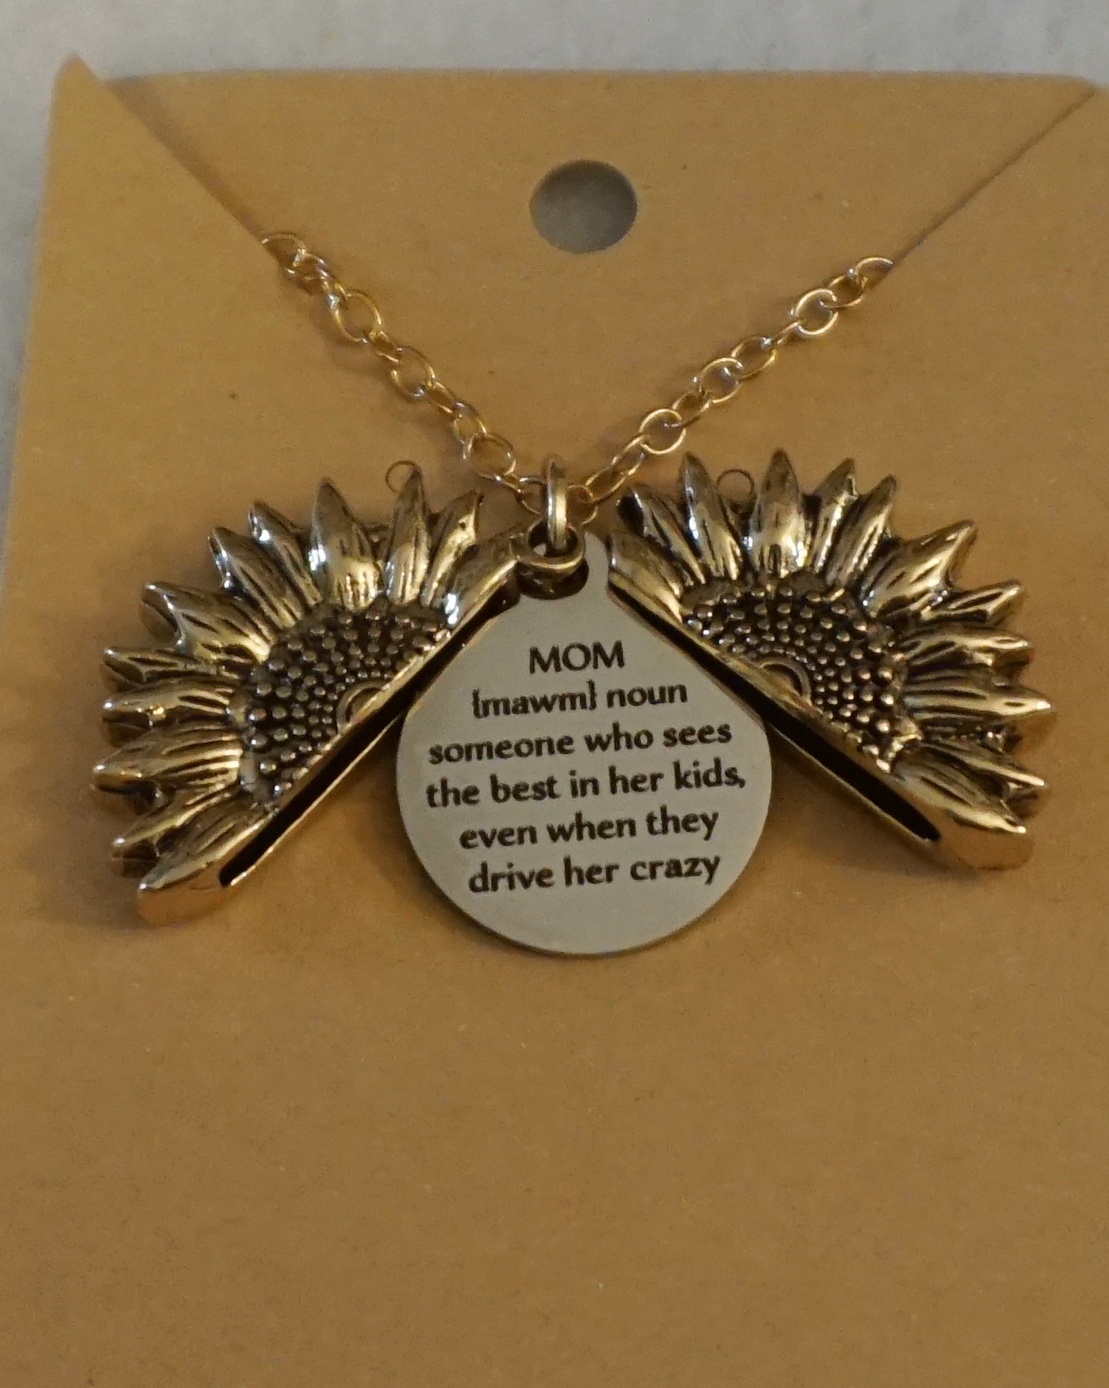 Mom (mawm) Sunflower Necklace